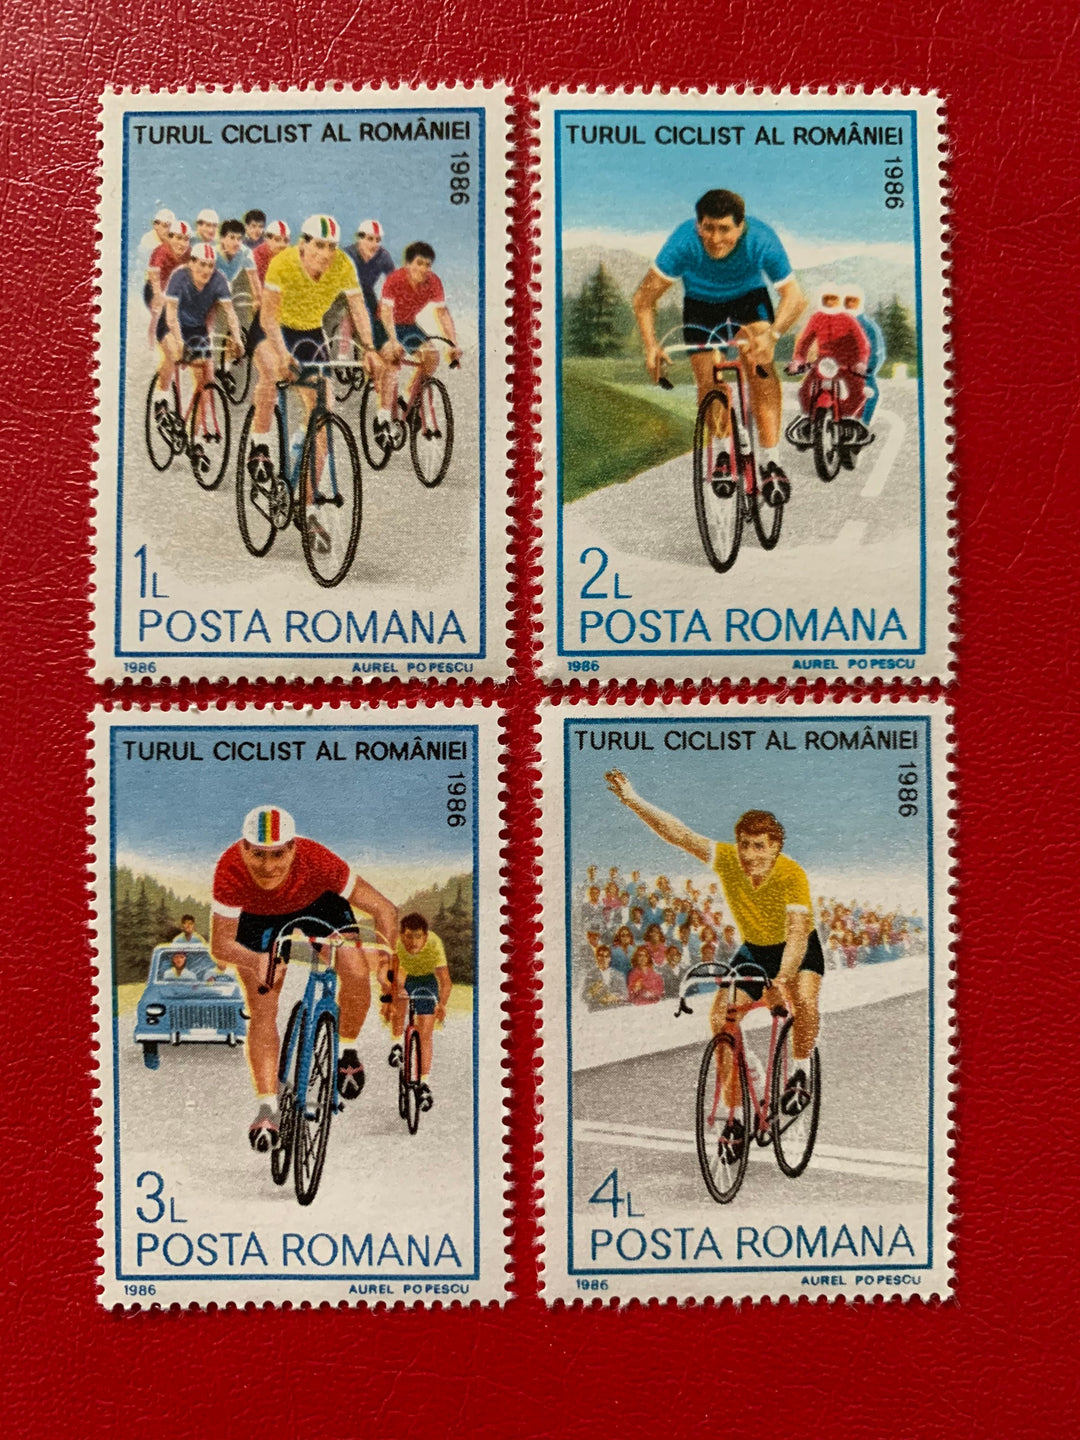 Romania - Original Vintage Postage Stamps - Cyclists 1986